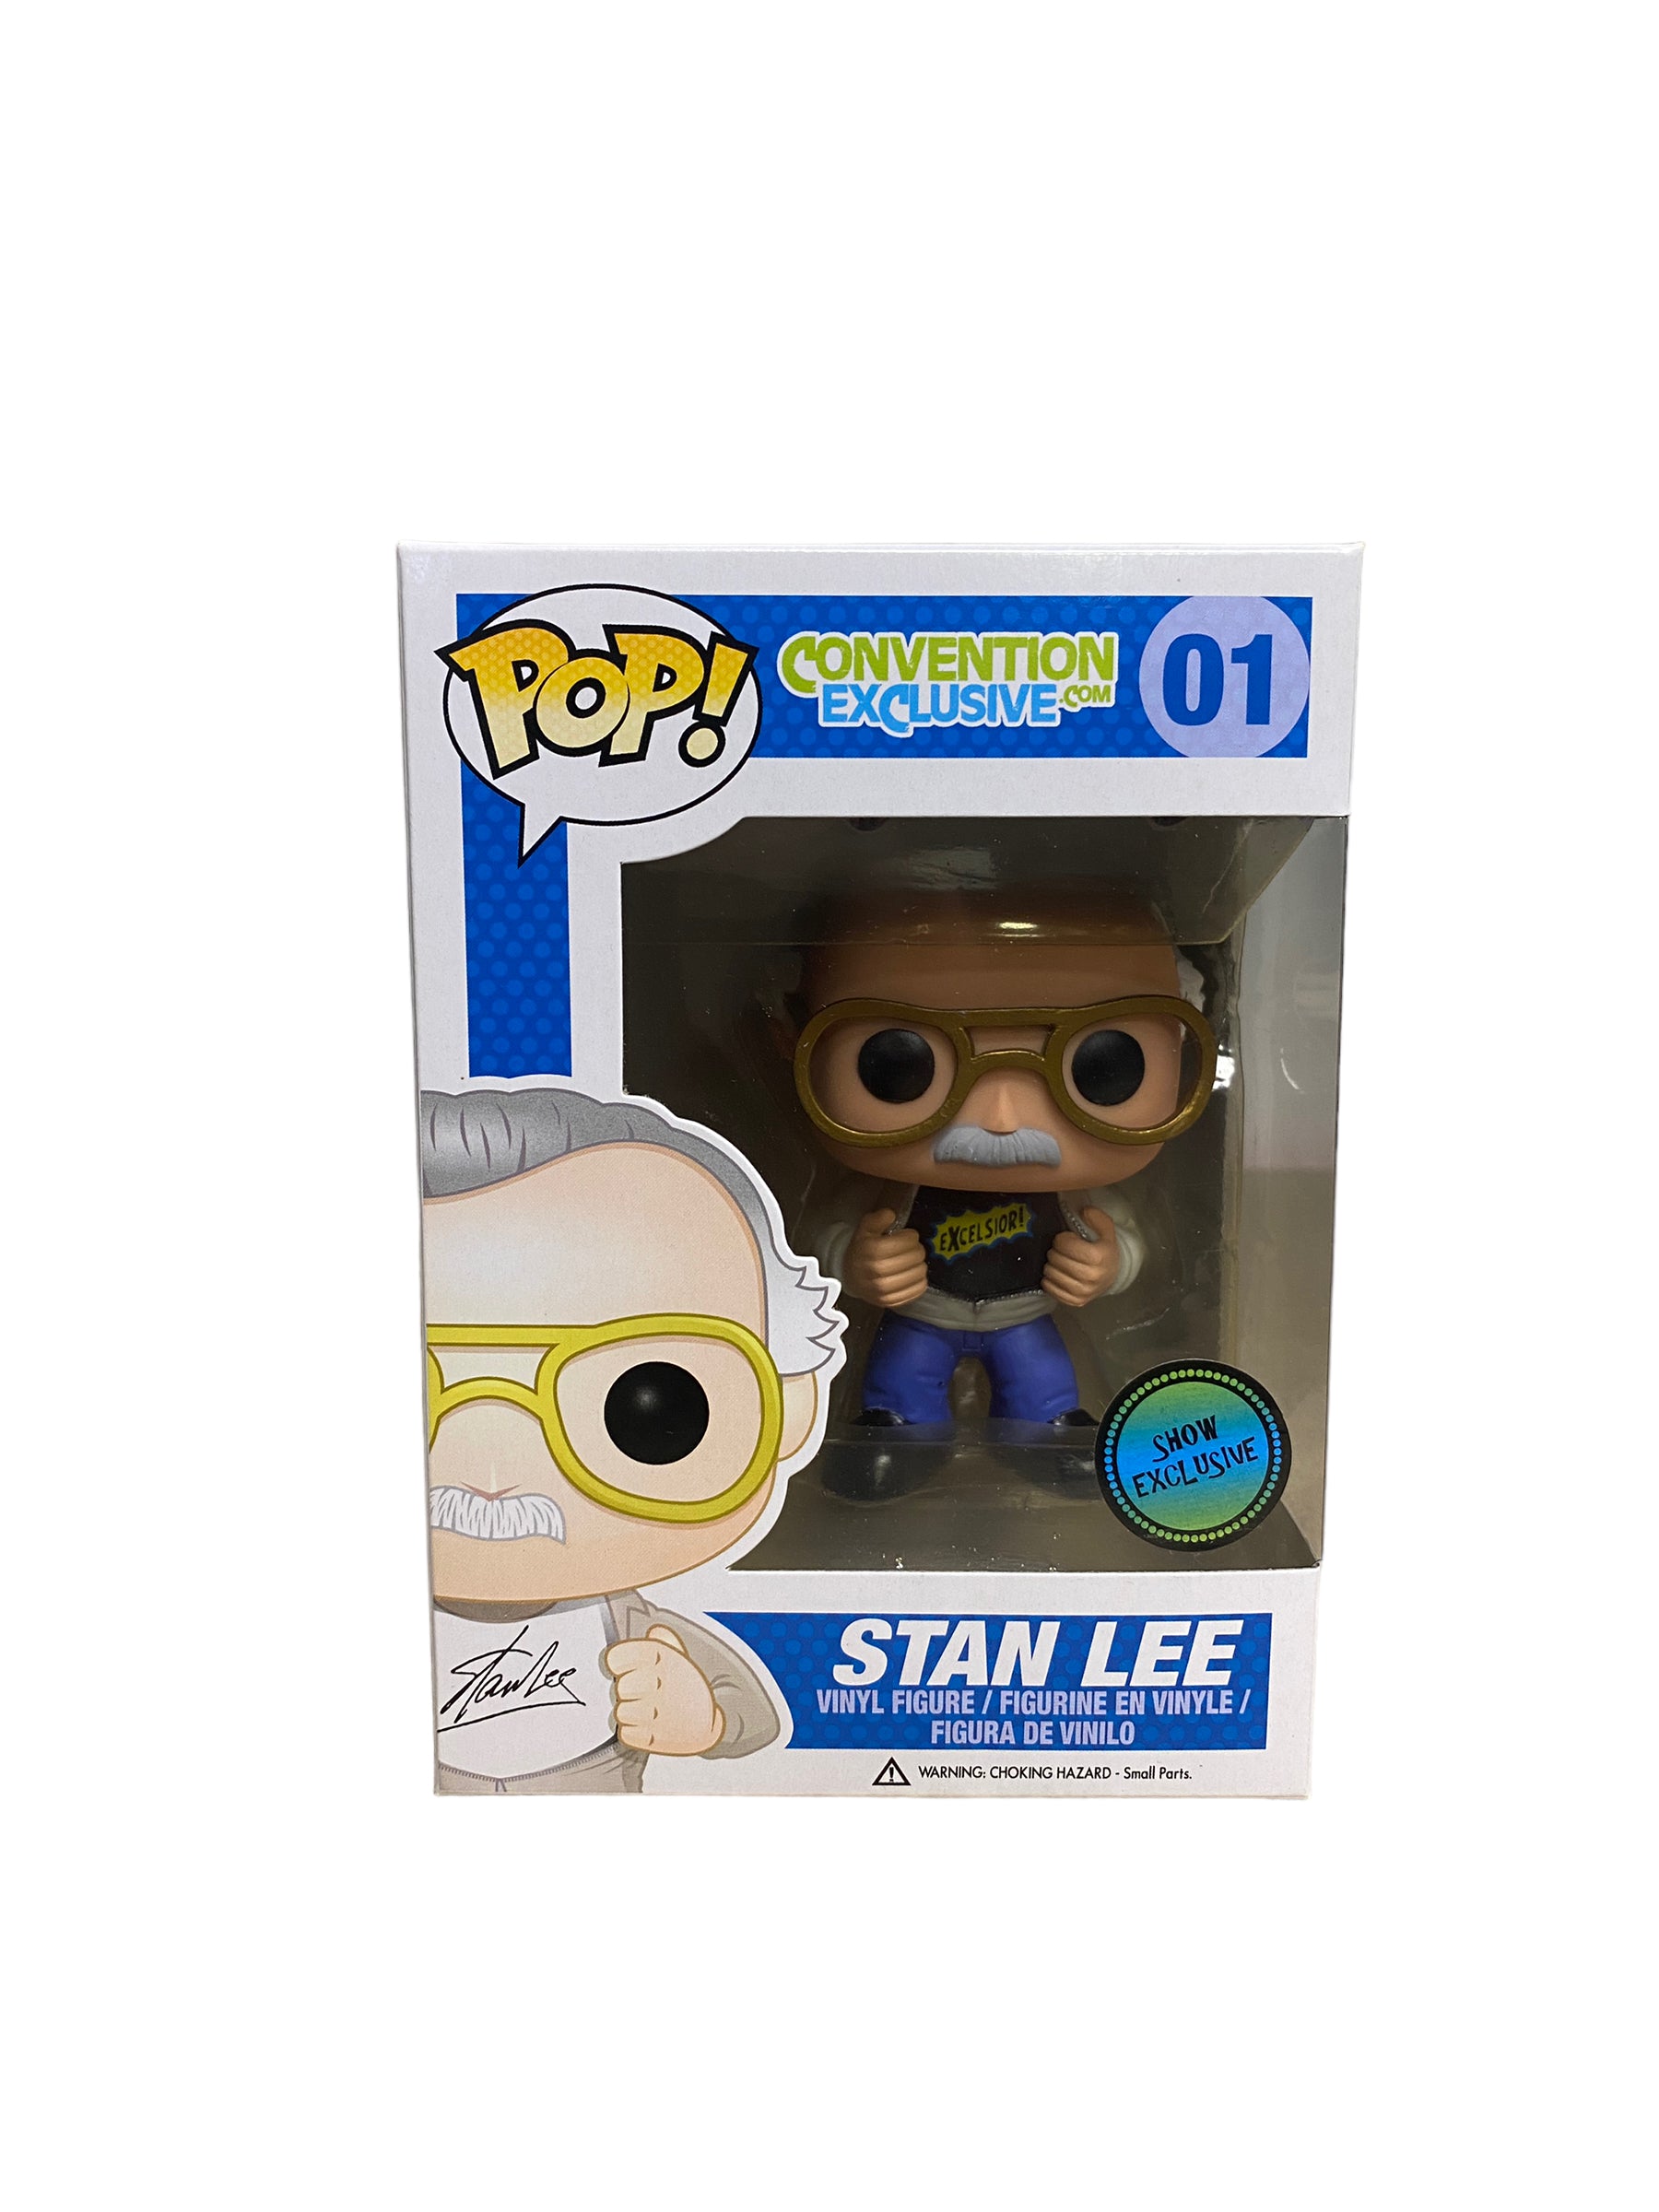 Stan Lee #01 (Excelsior) Funko Pop! - Wizard World Chicago 2014 Exclusive LE1000 Pcs - Condition 9/10